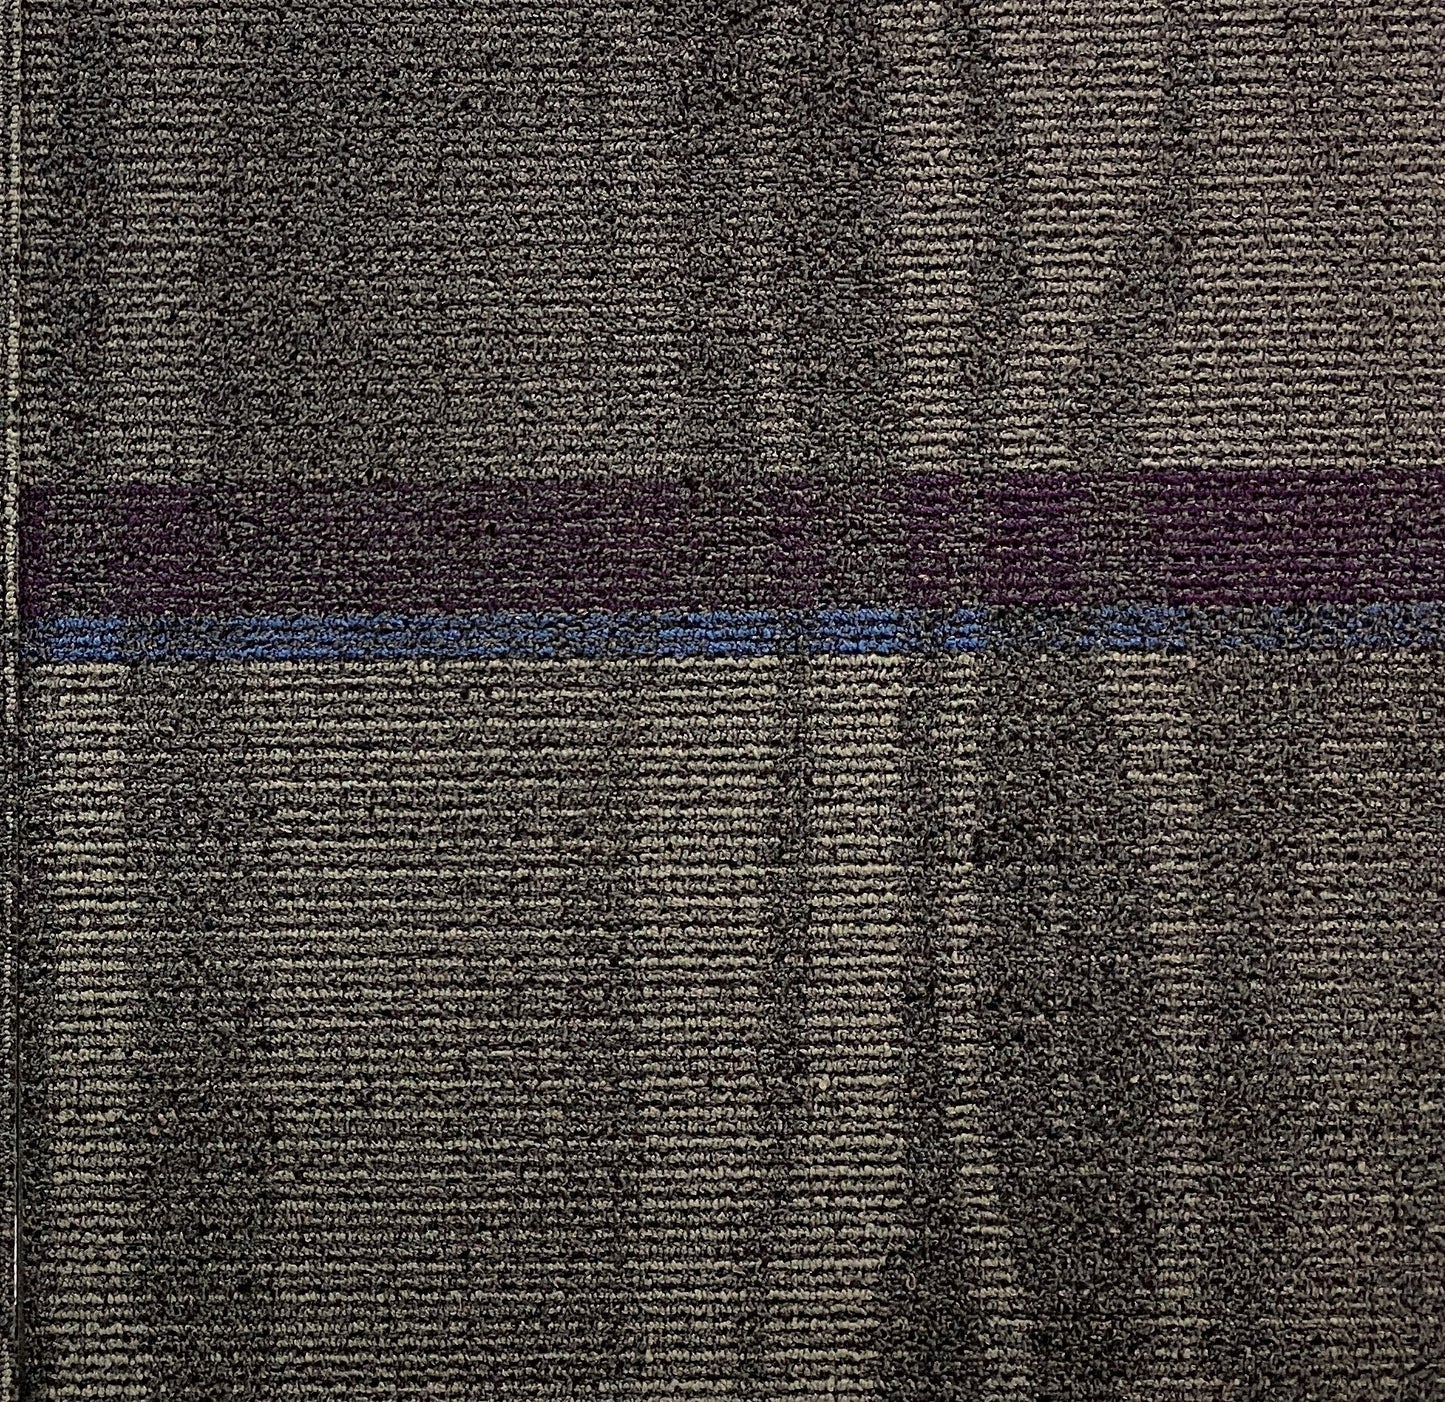 Shaw Mindset Carpet Tile-24"x 24"(12 Tiles/case, 48 sq. ft./case)